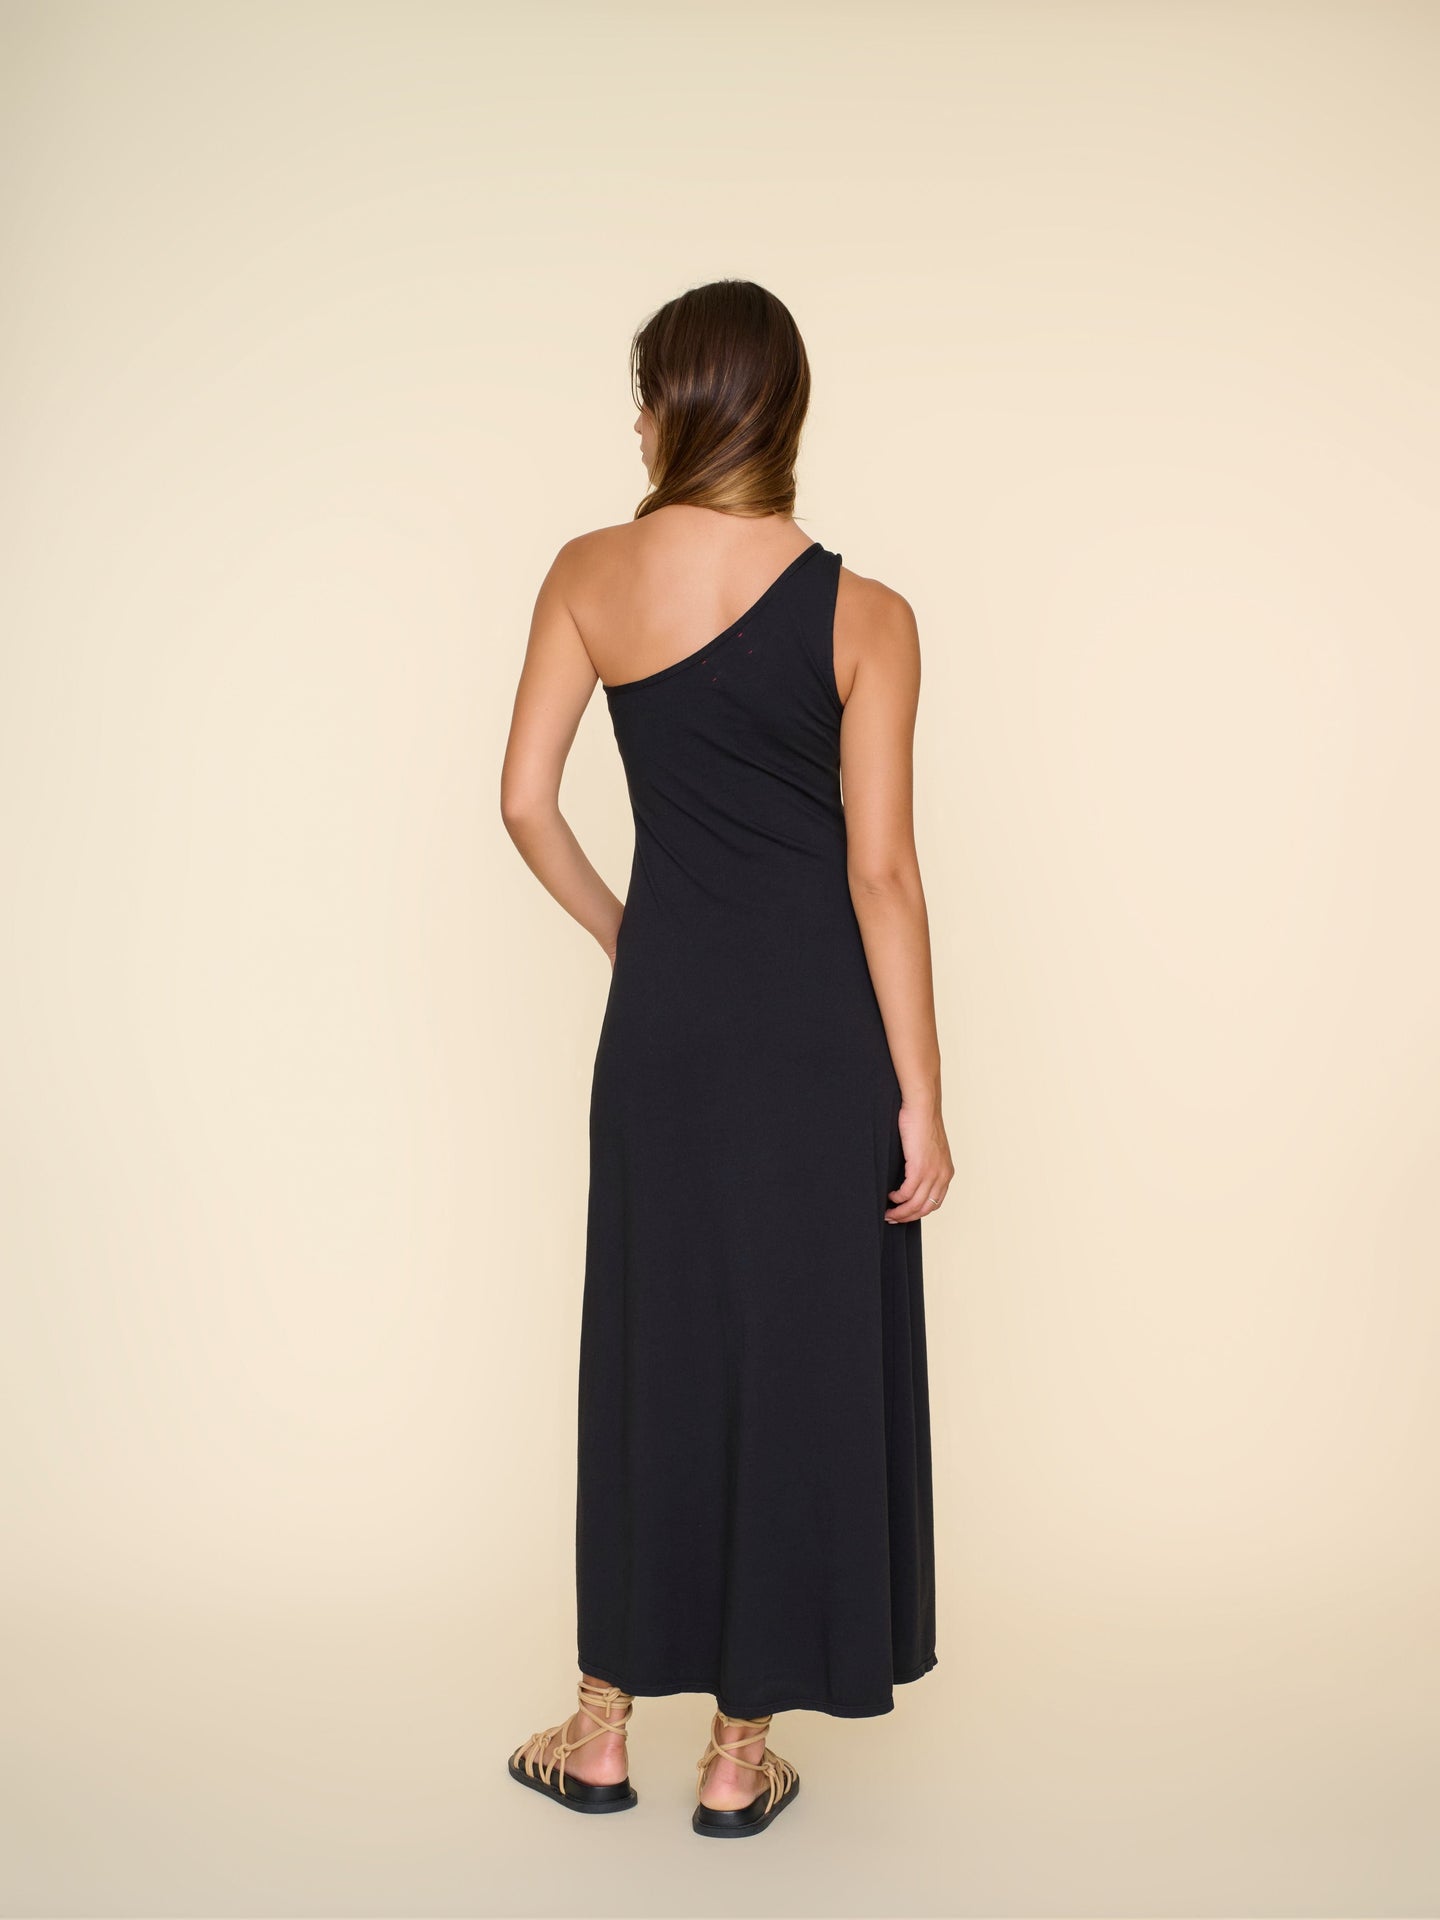 Xirena Dress Black Genevieve Dress